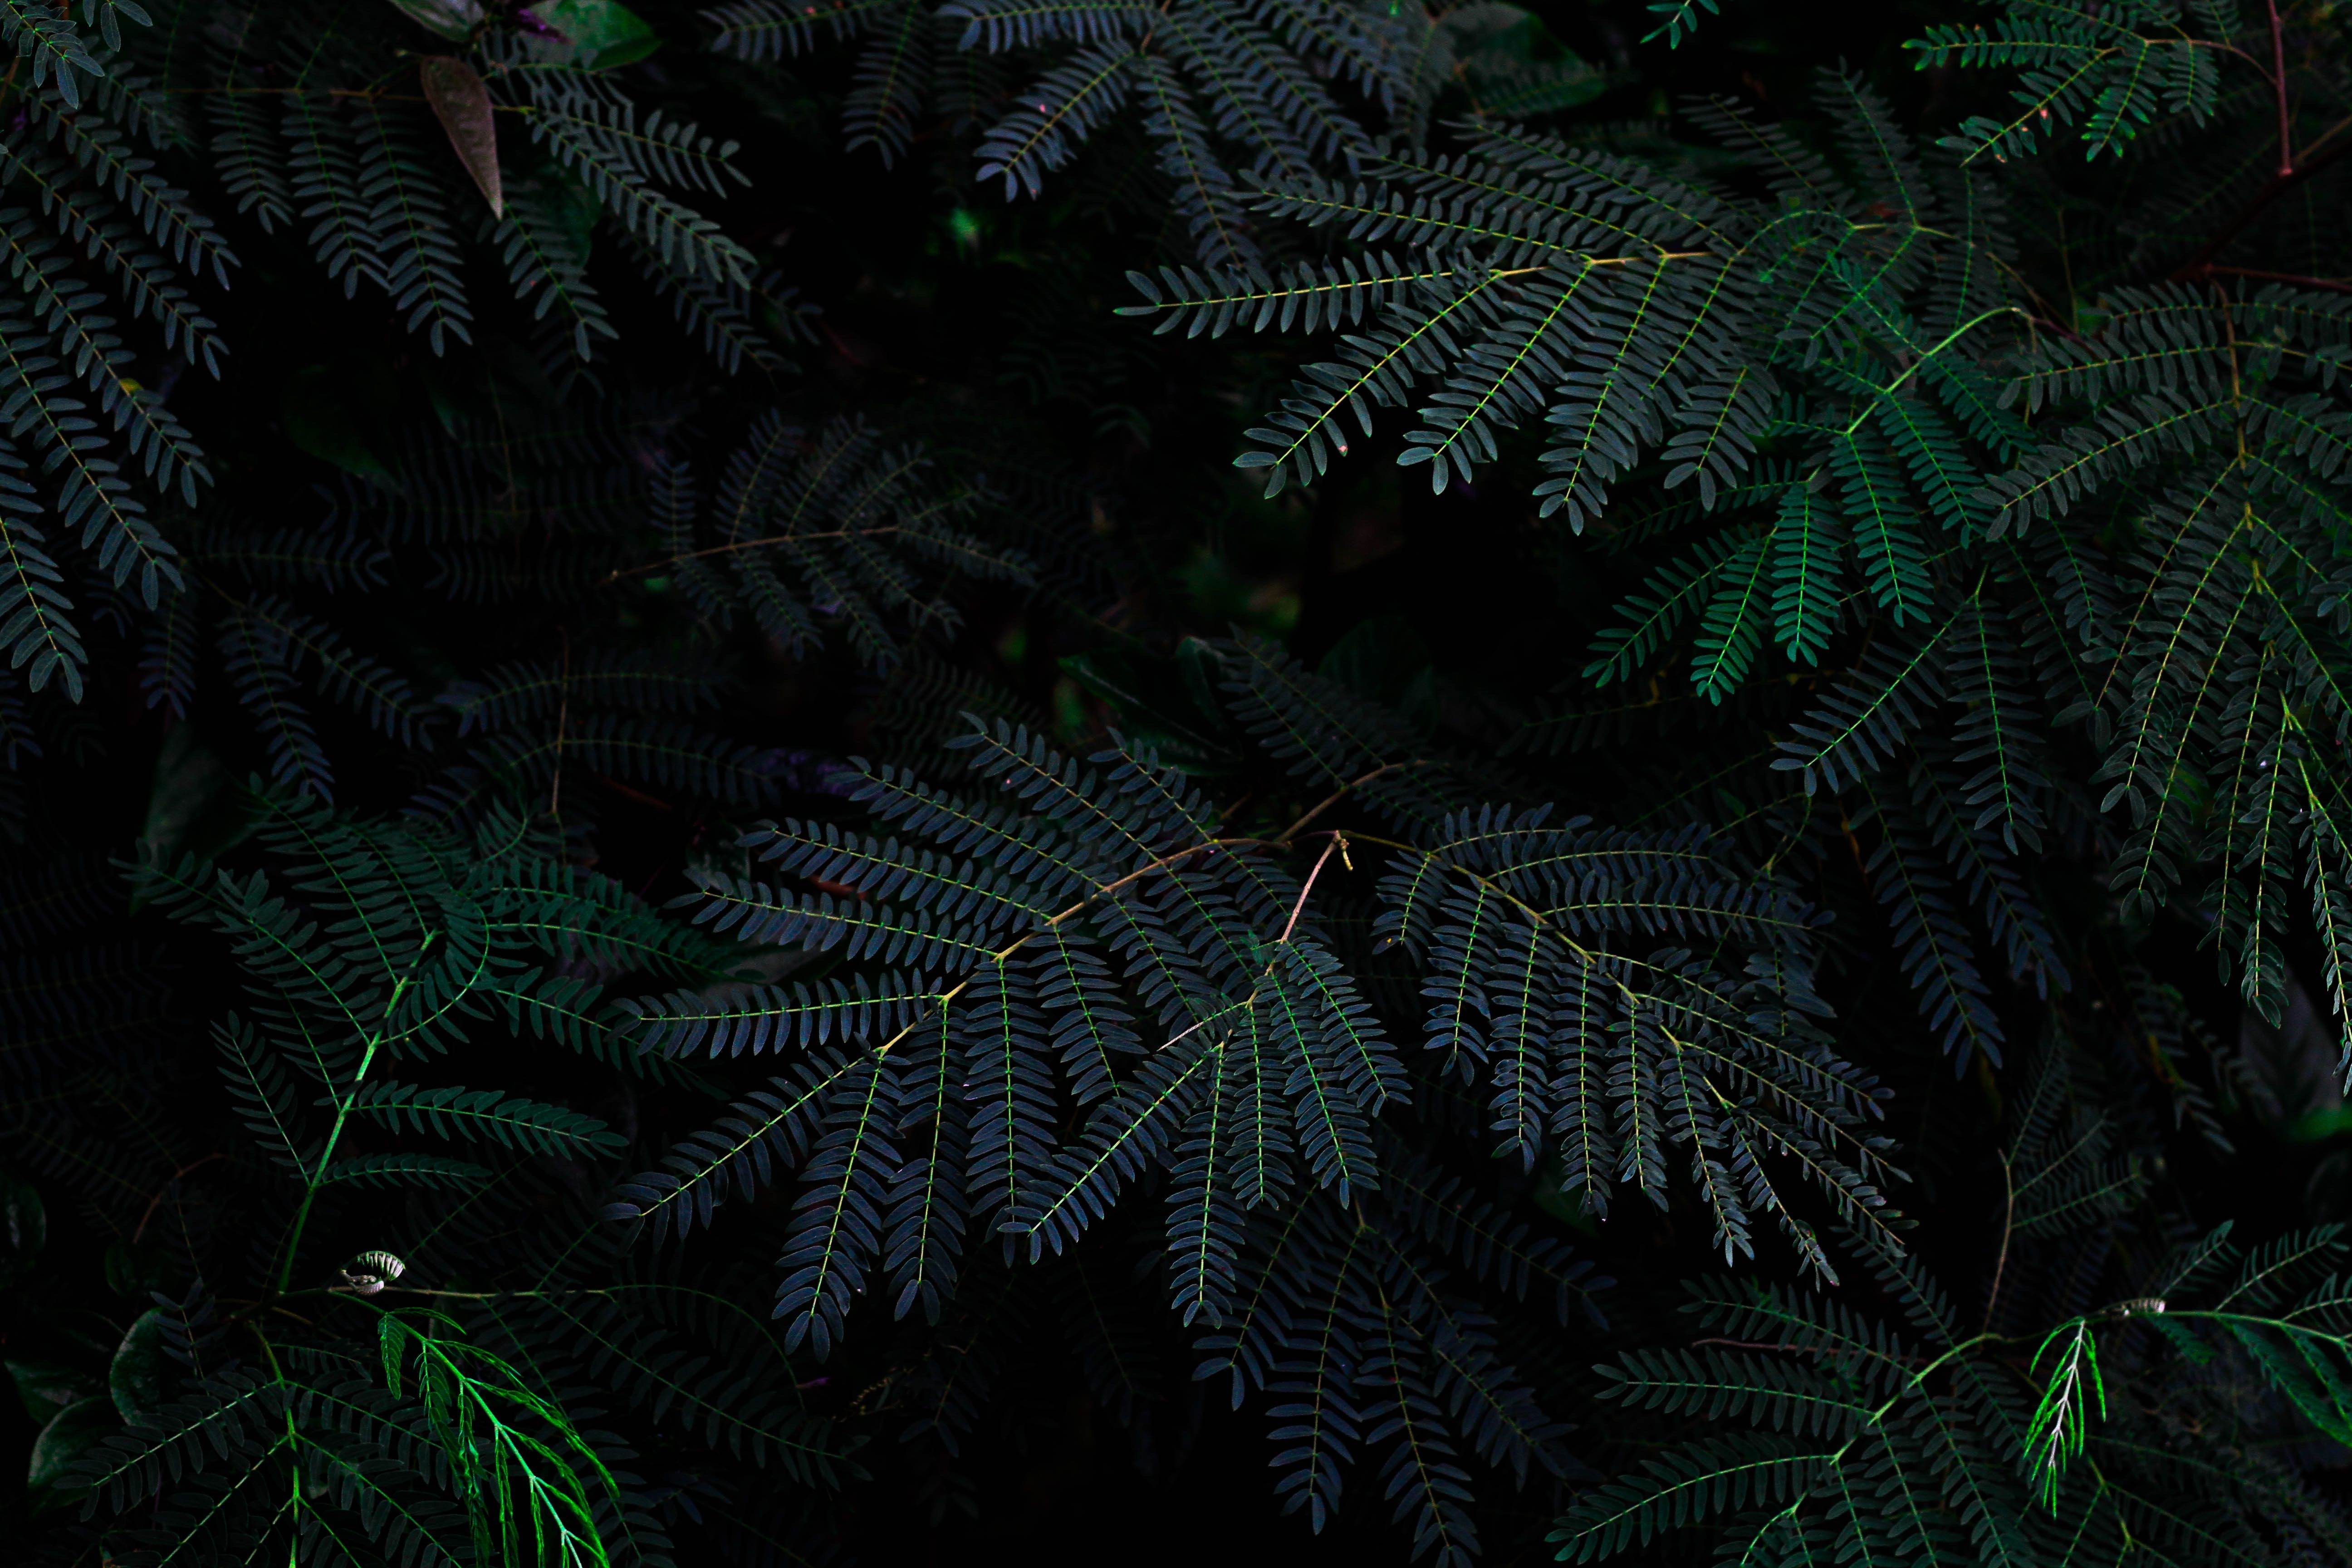 HD Wallpaper Up close photo of dark green pine tree limbs